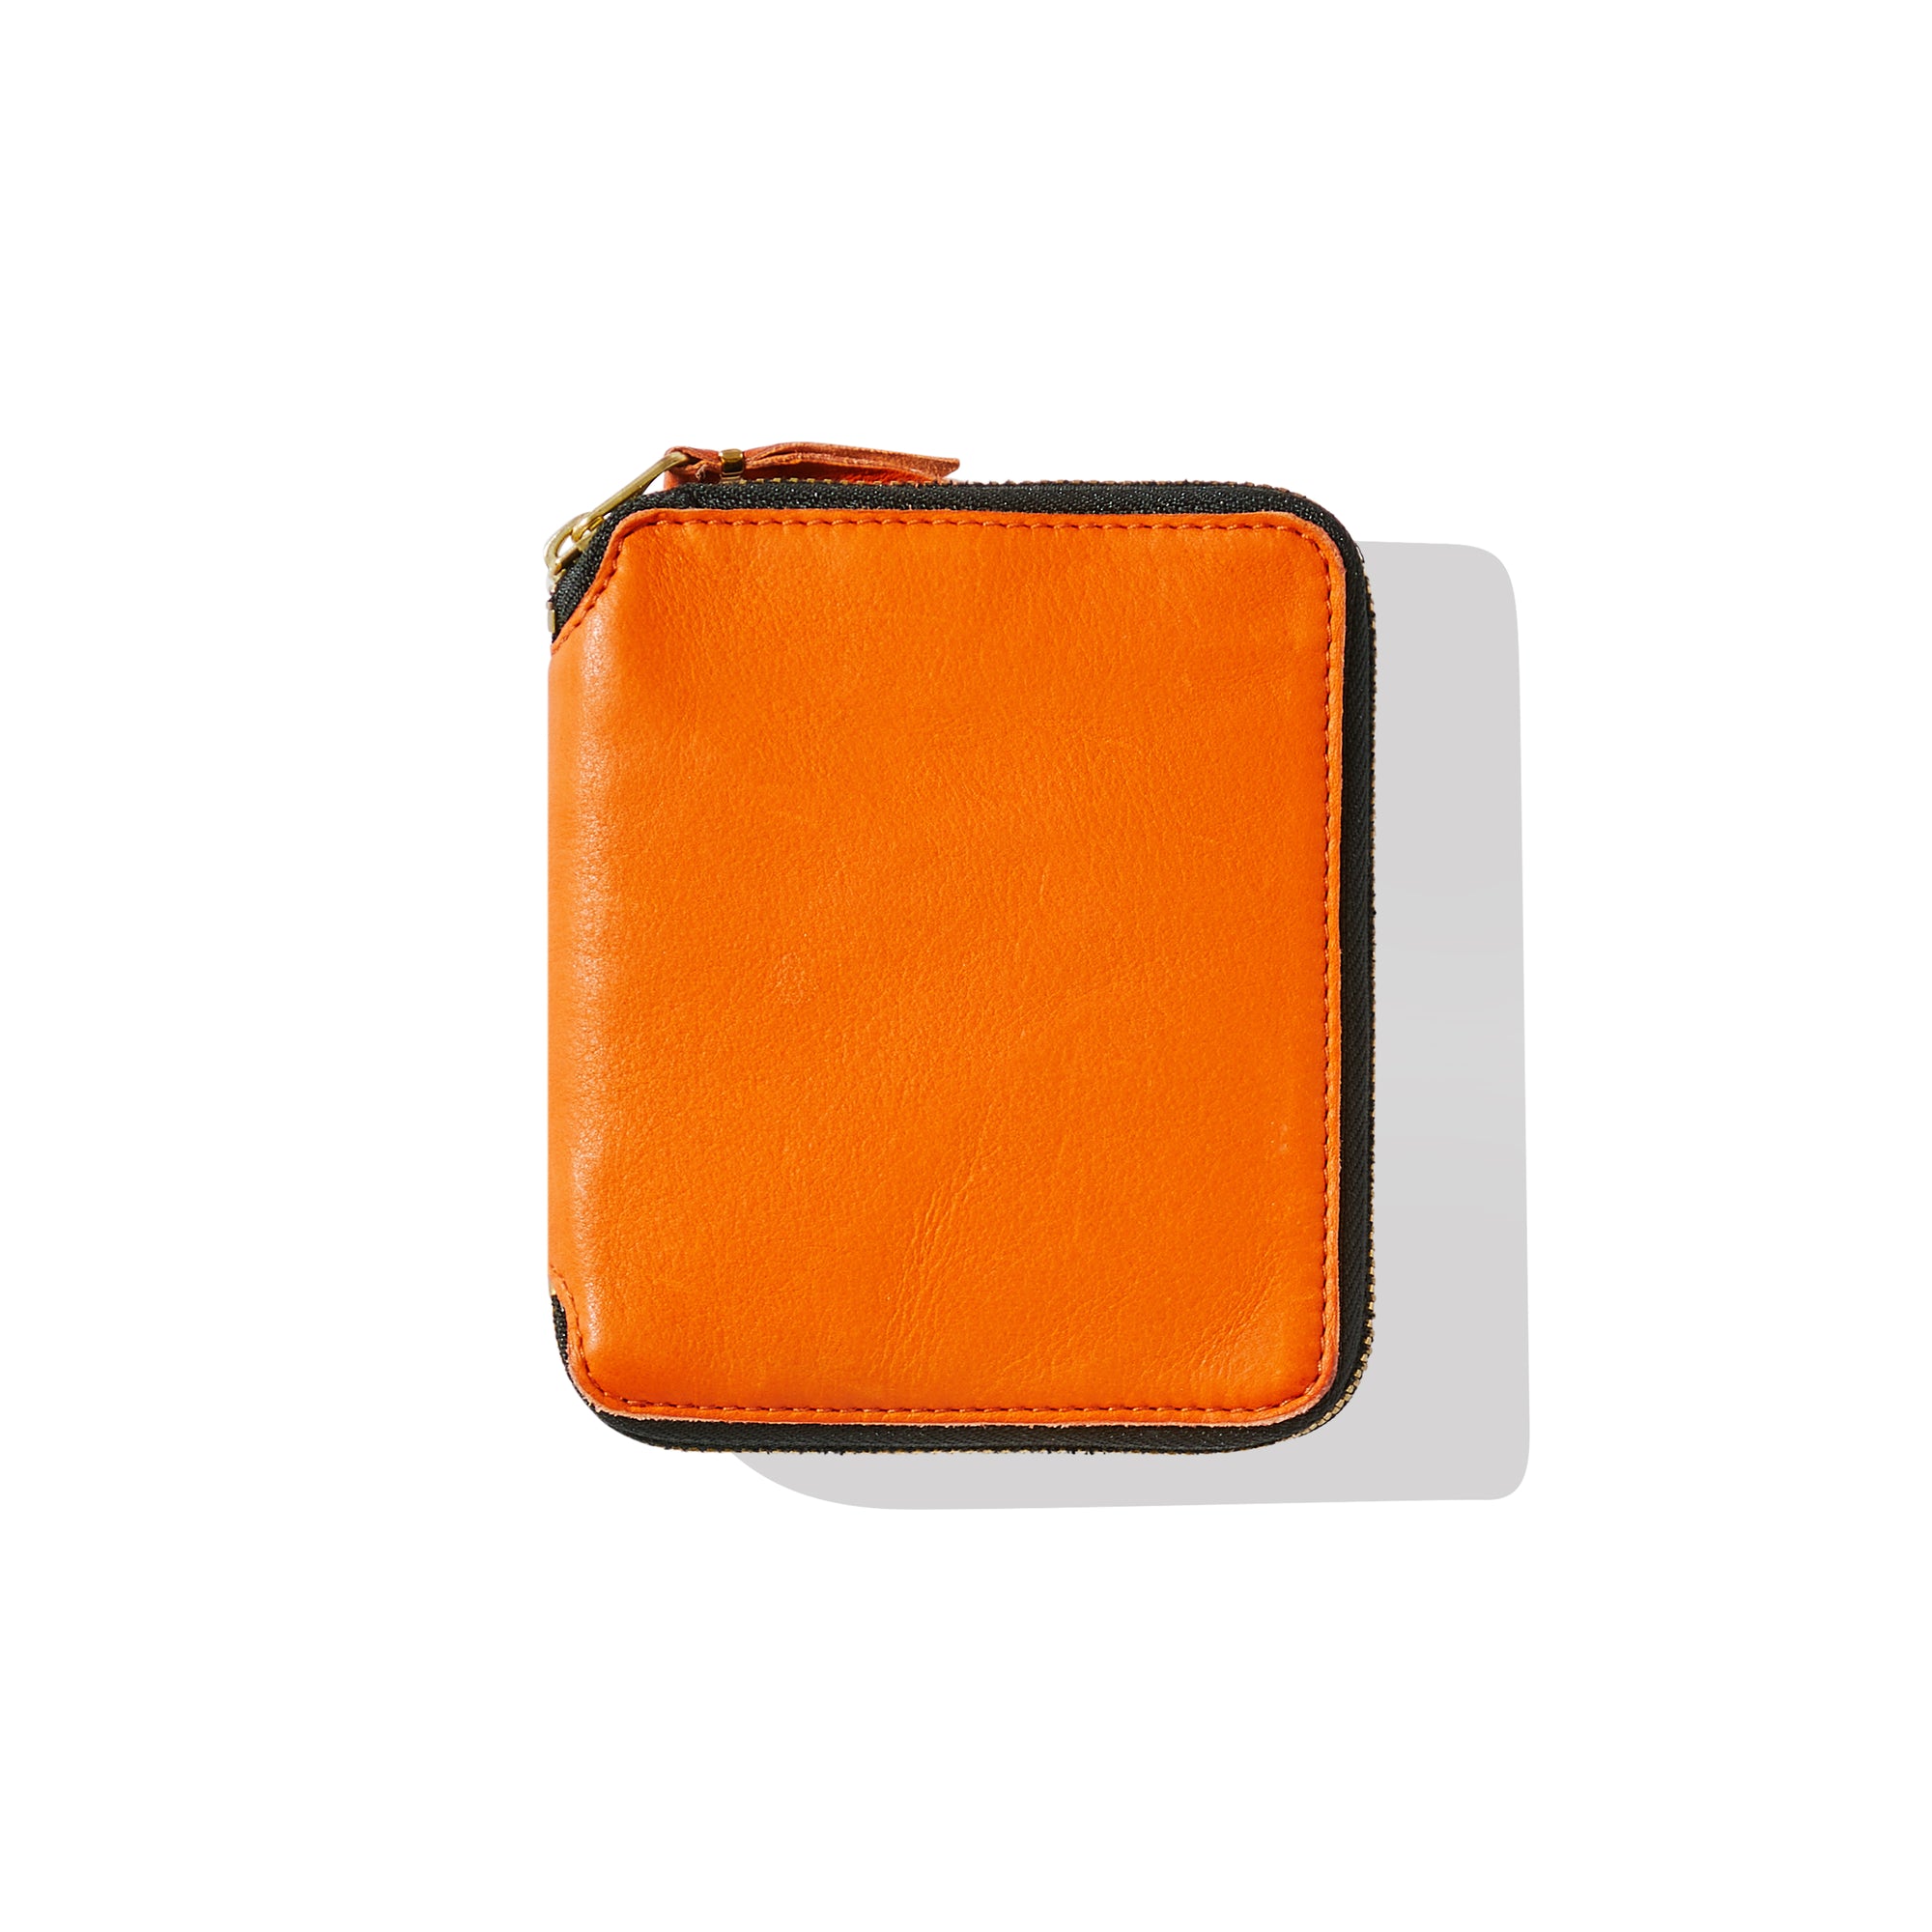 CDG Wallet - Washed Full Zip Around Wallet - (Burnt Orange) view 1